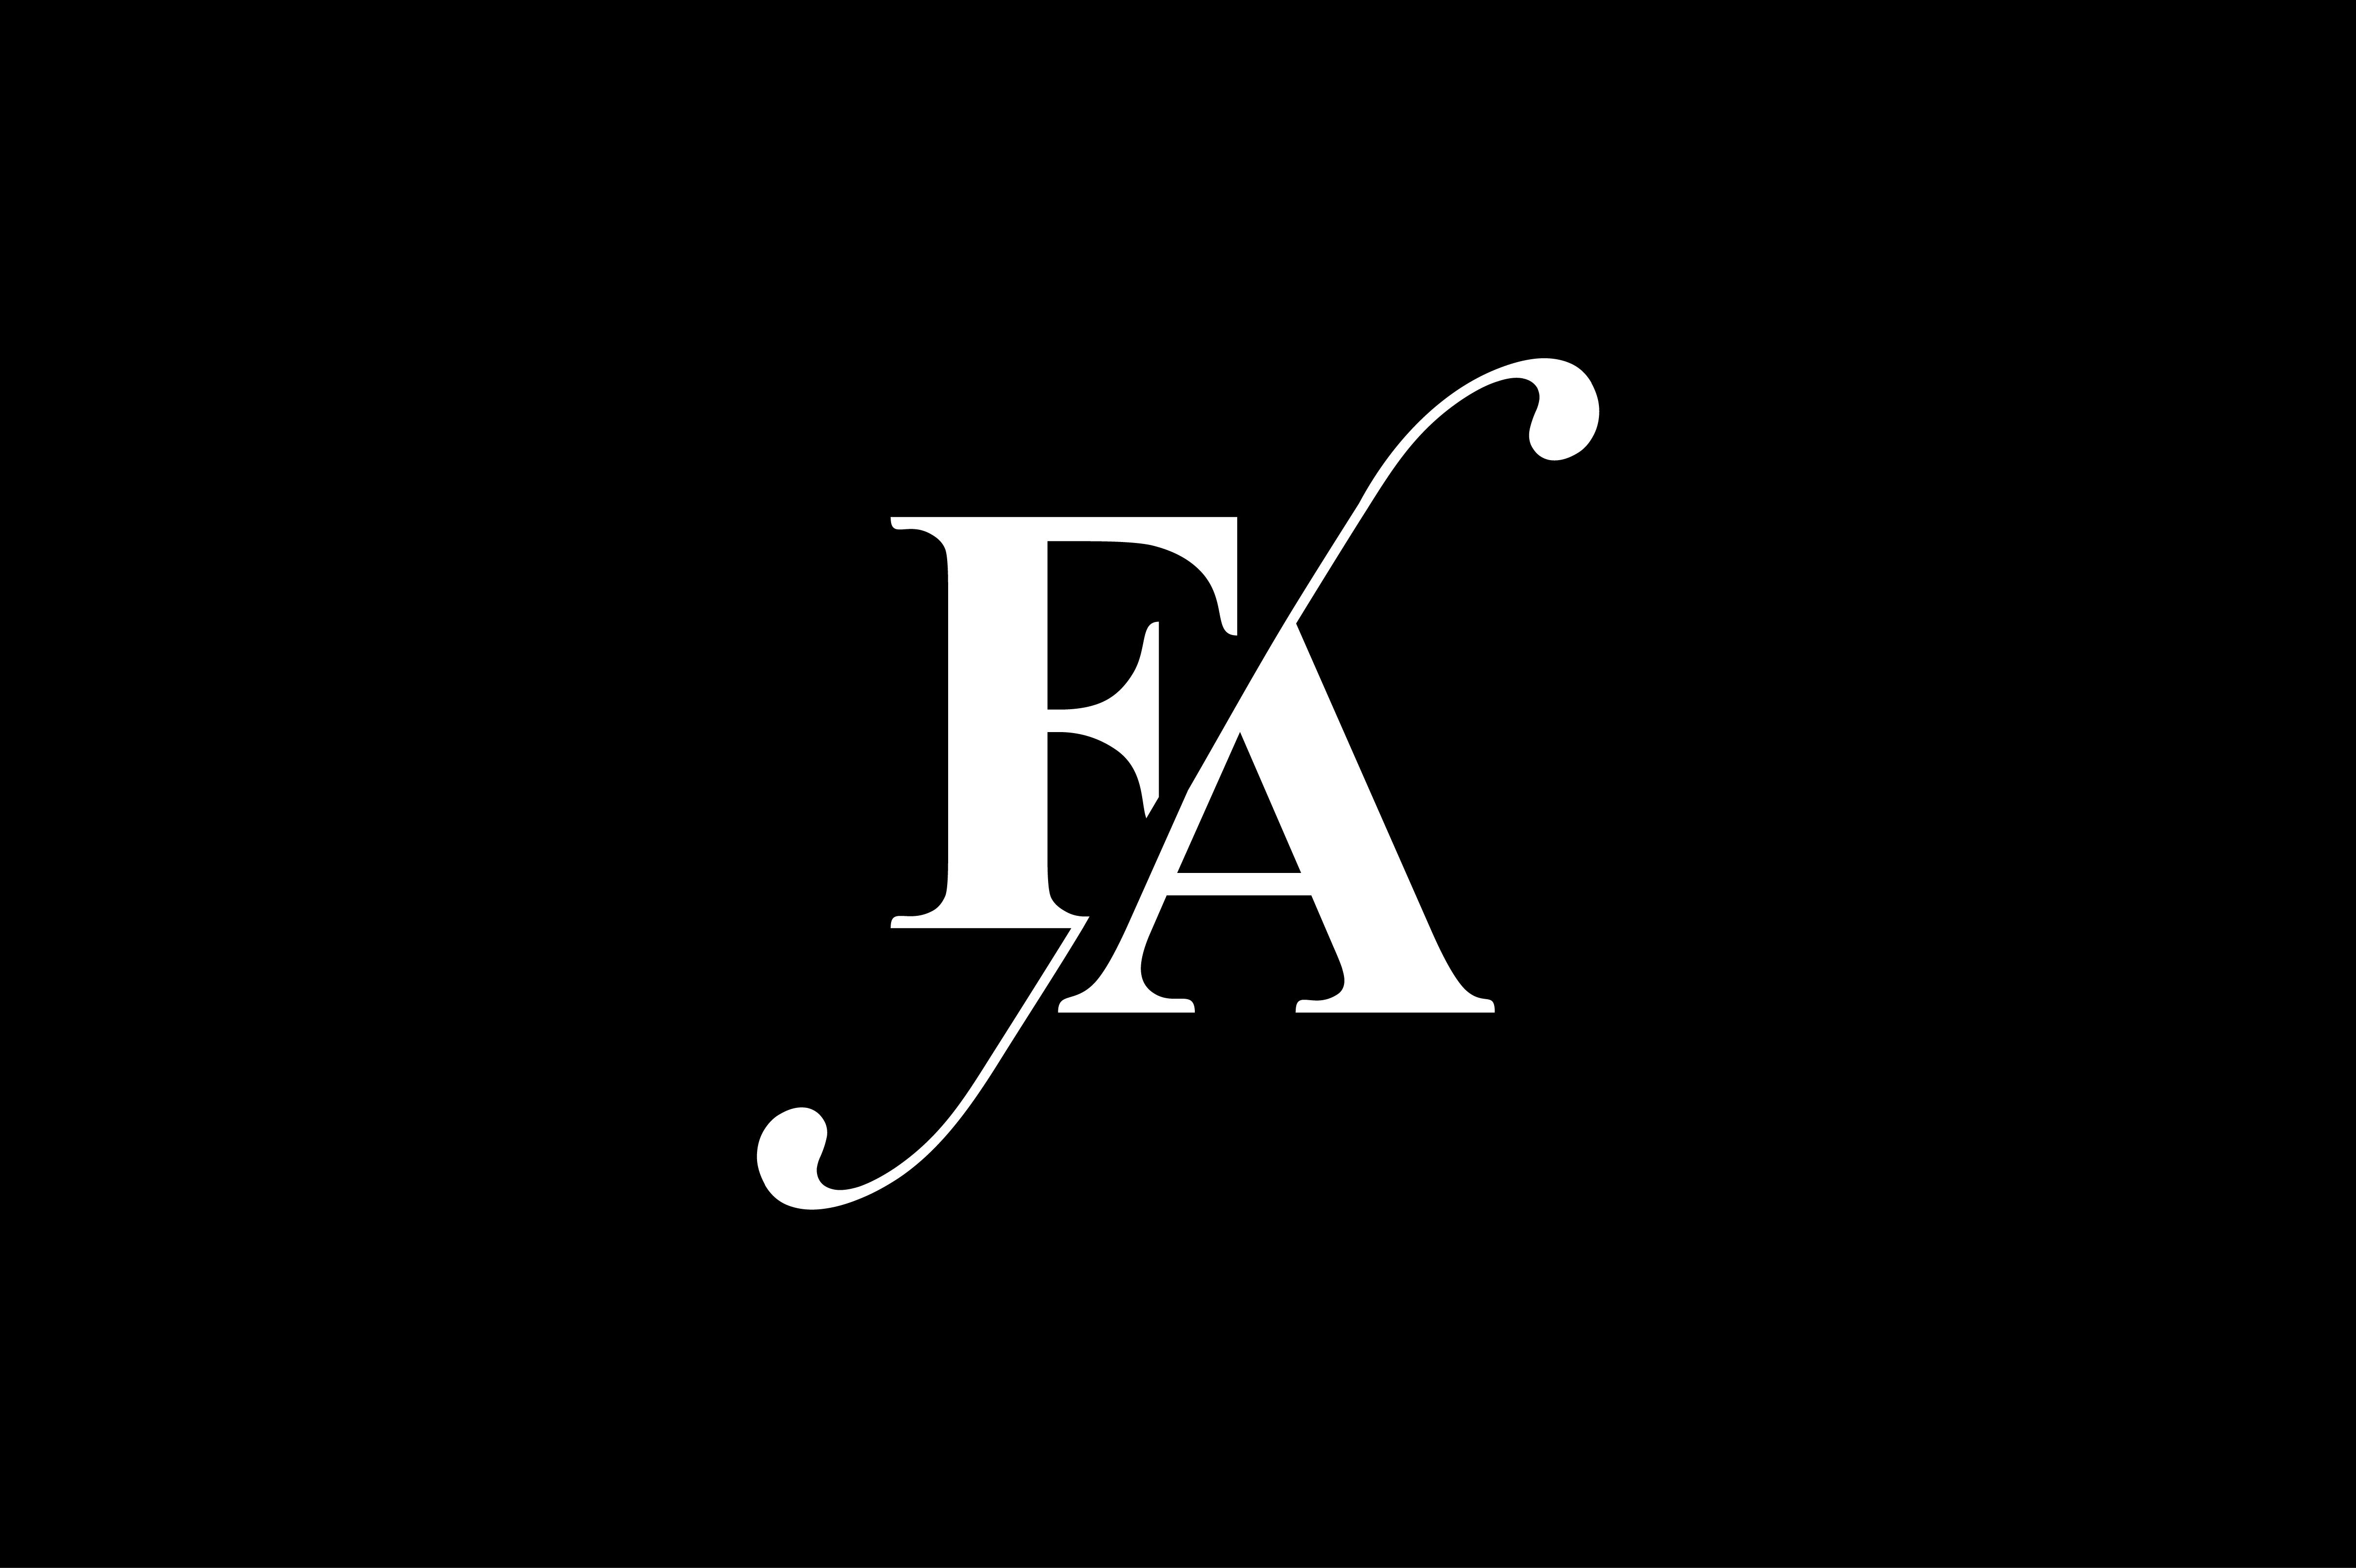 fa-monogram-logo-design-by-vectorseller-thehungryjpeg